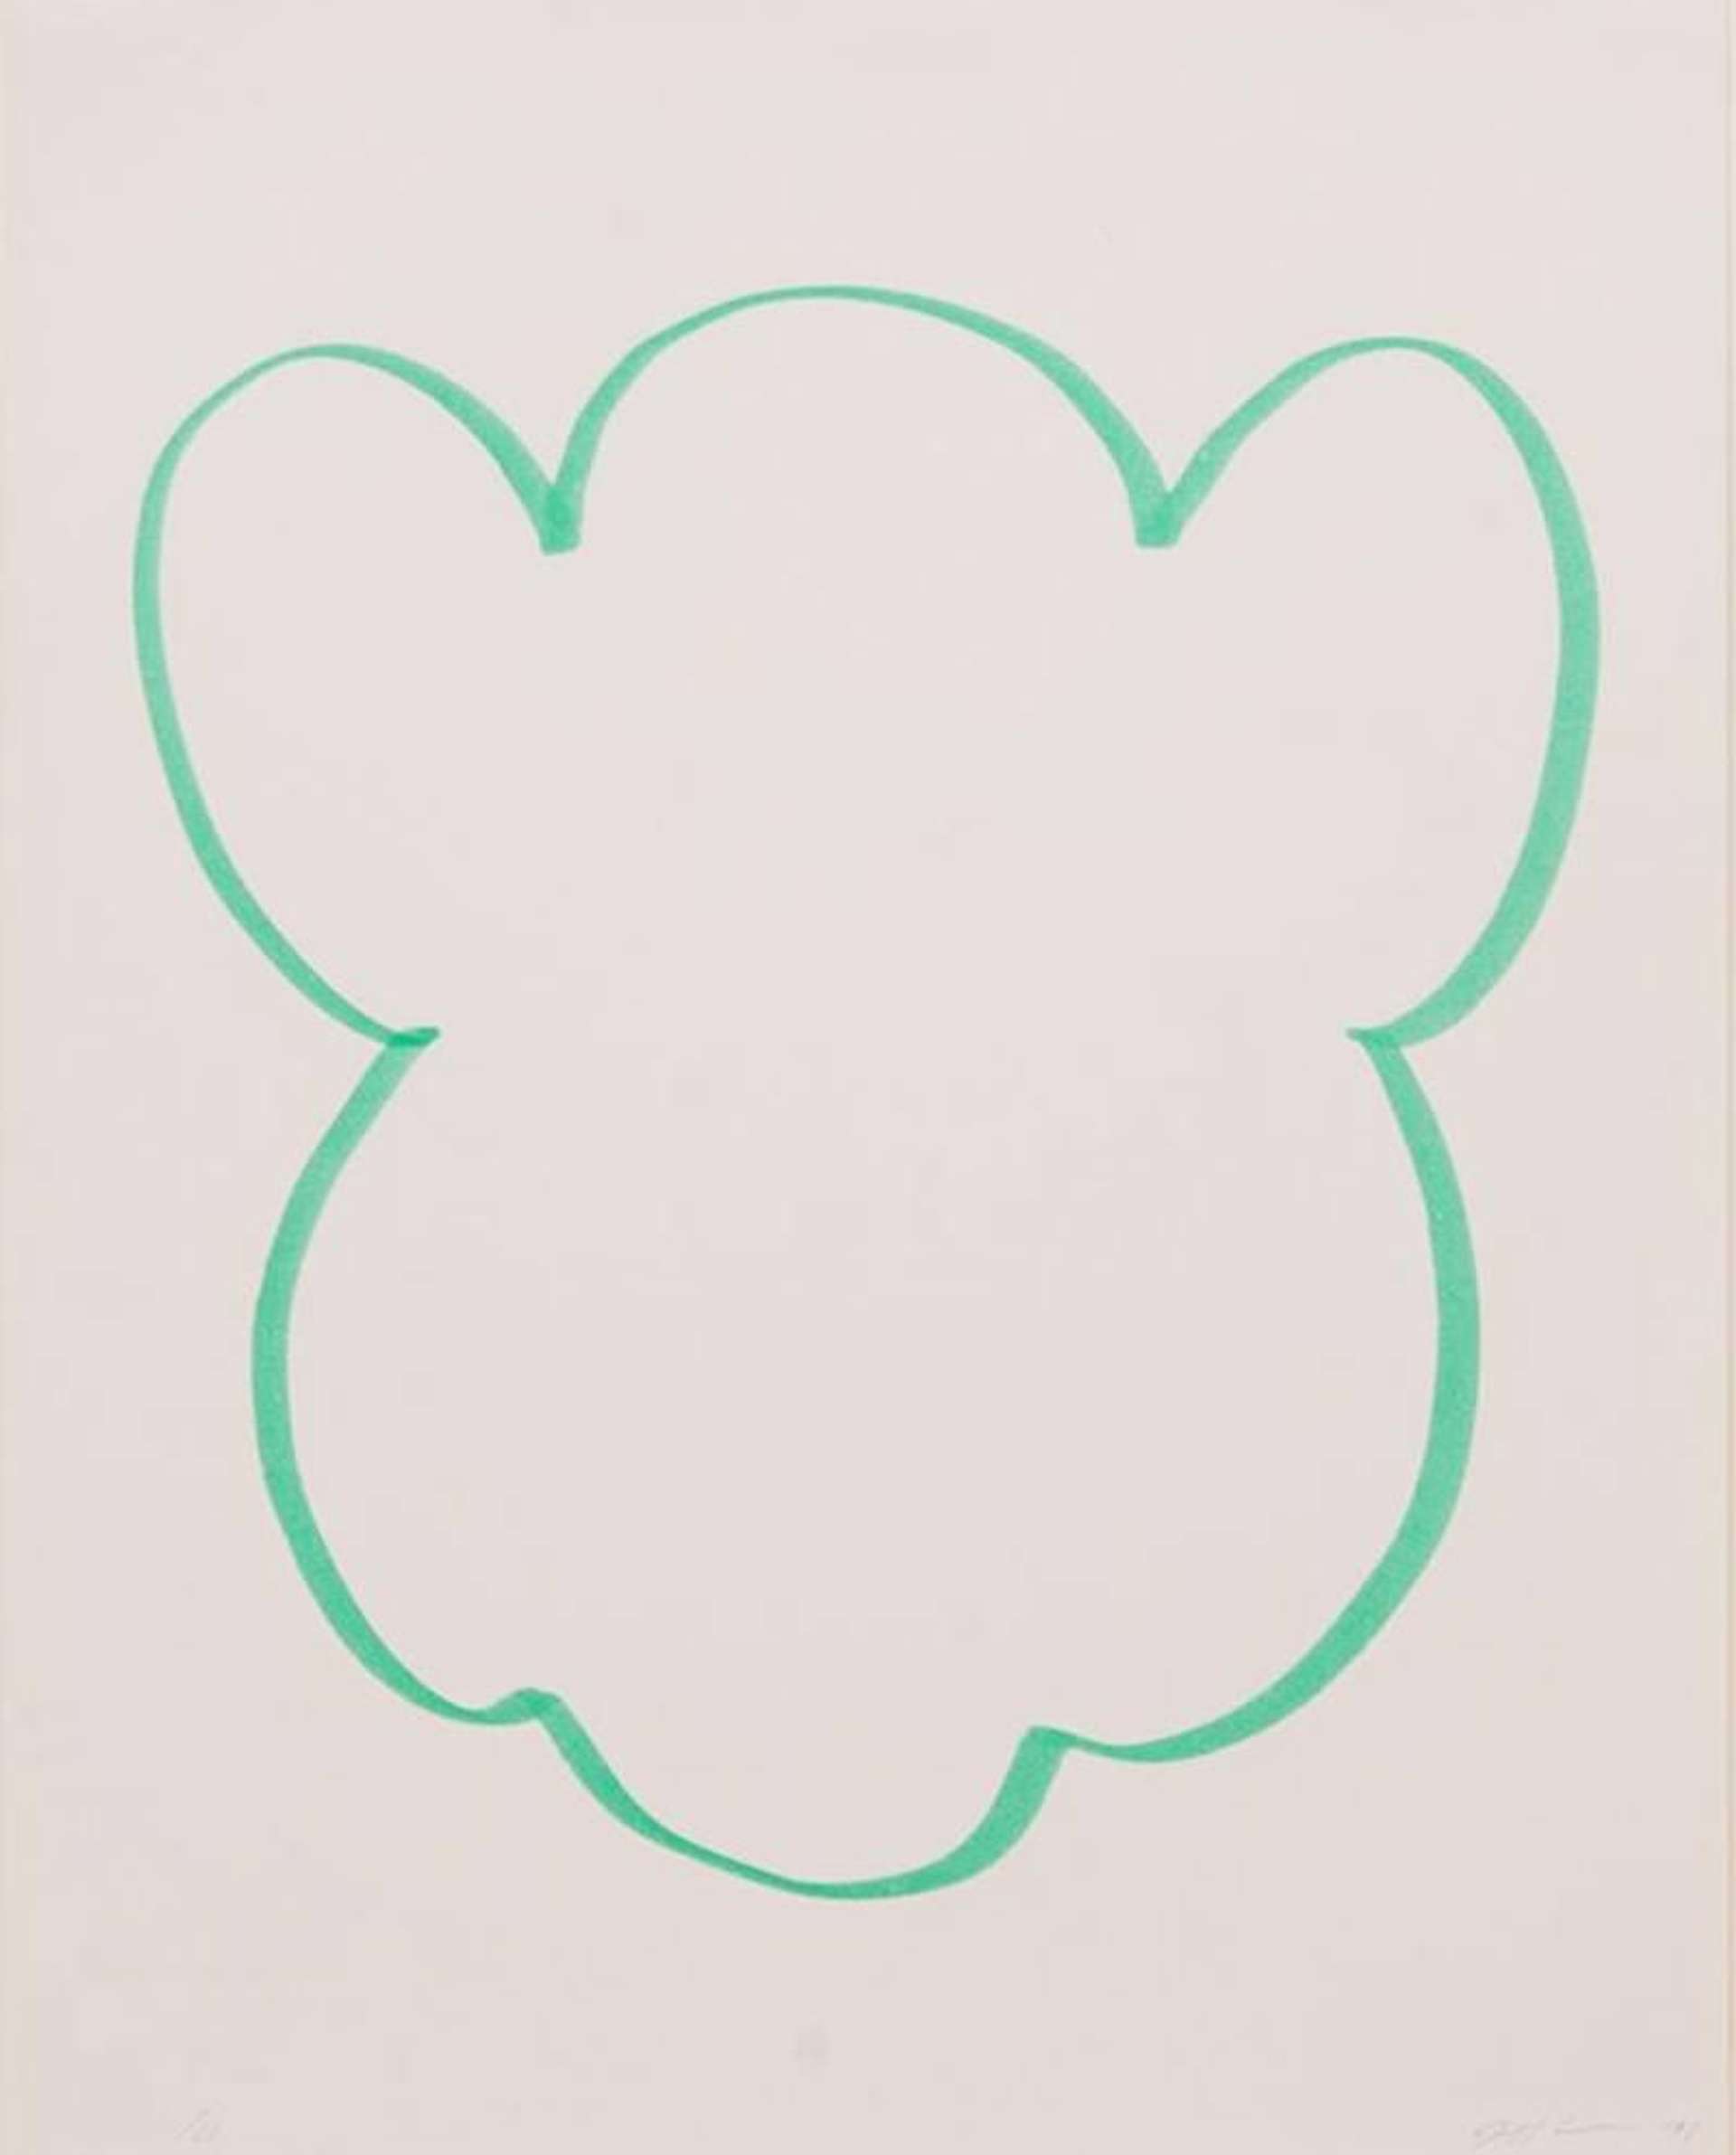 Jeff Koons: Fun (green) - Signed Print